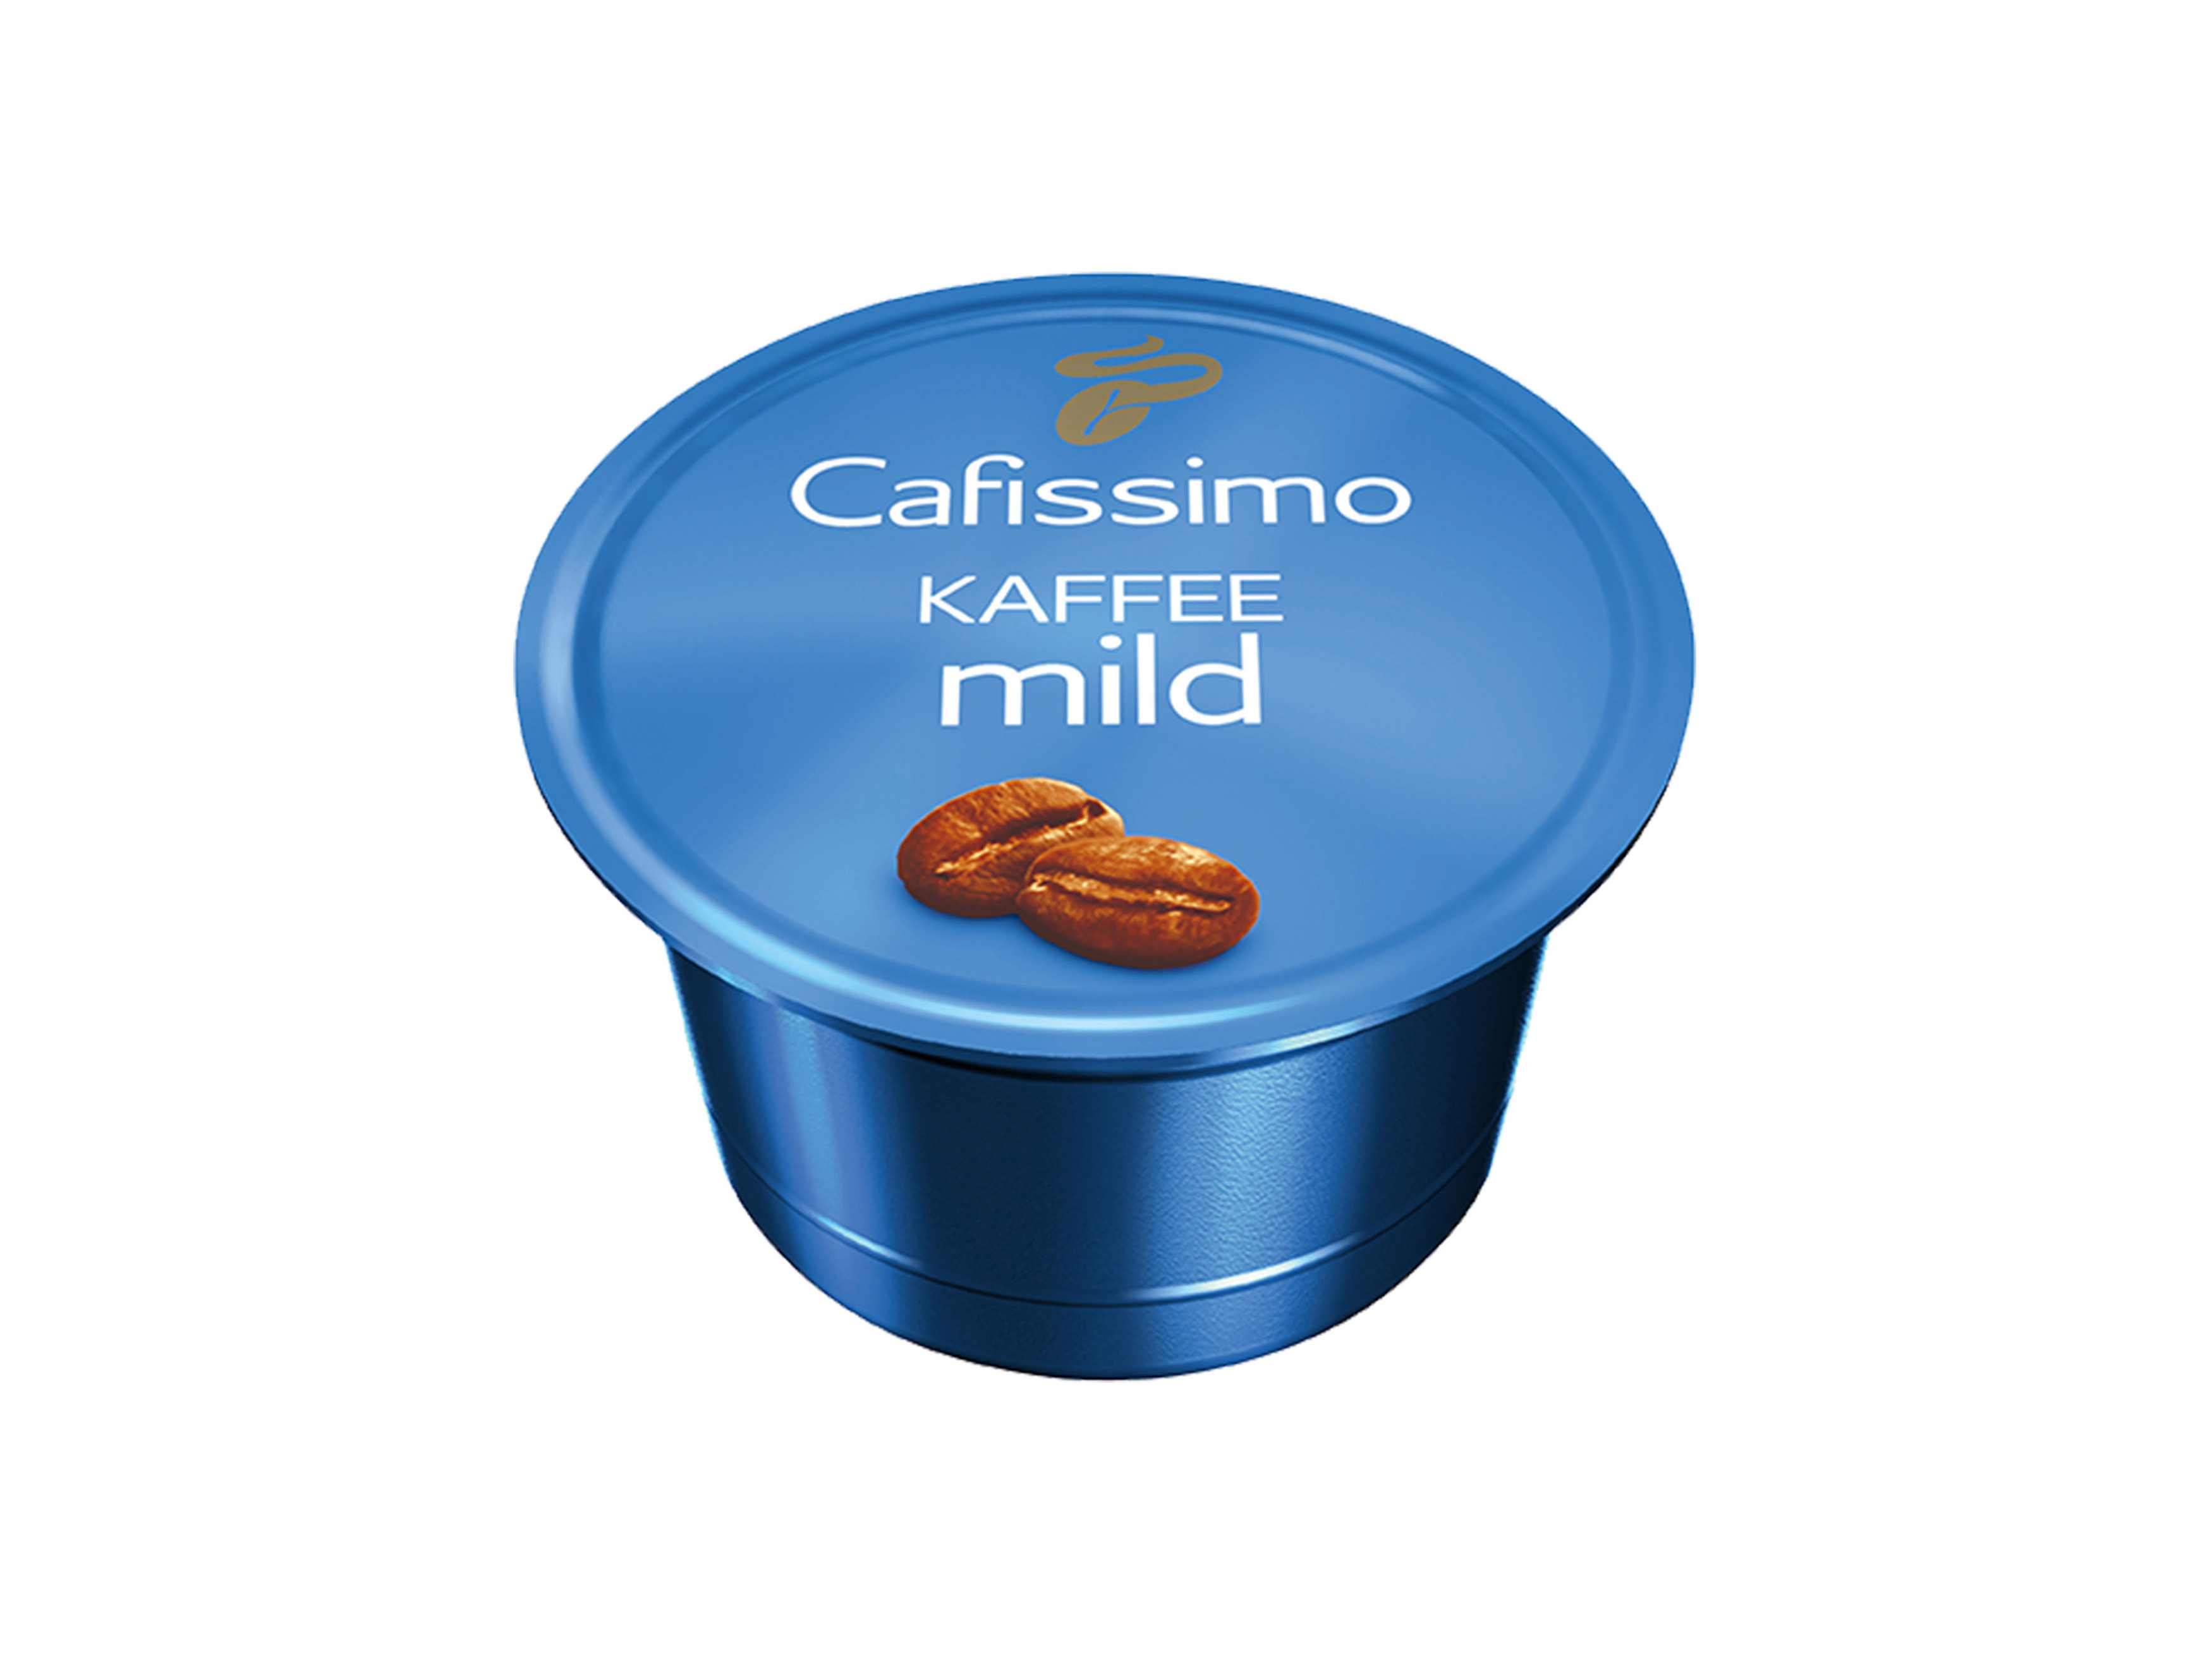 TCHIBO CAFISSIMO Cafissimo) Kaffeekapseln mild (Tchibo Kaffee